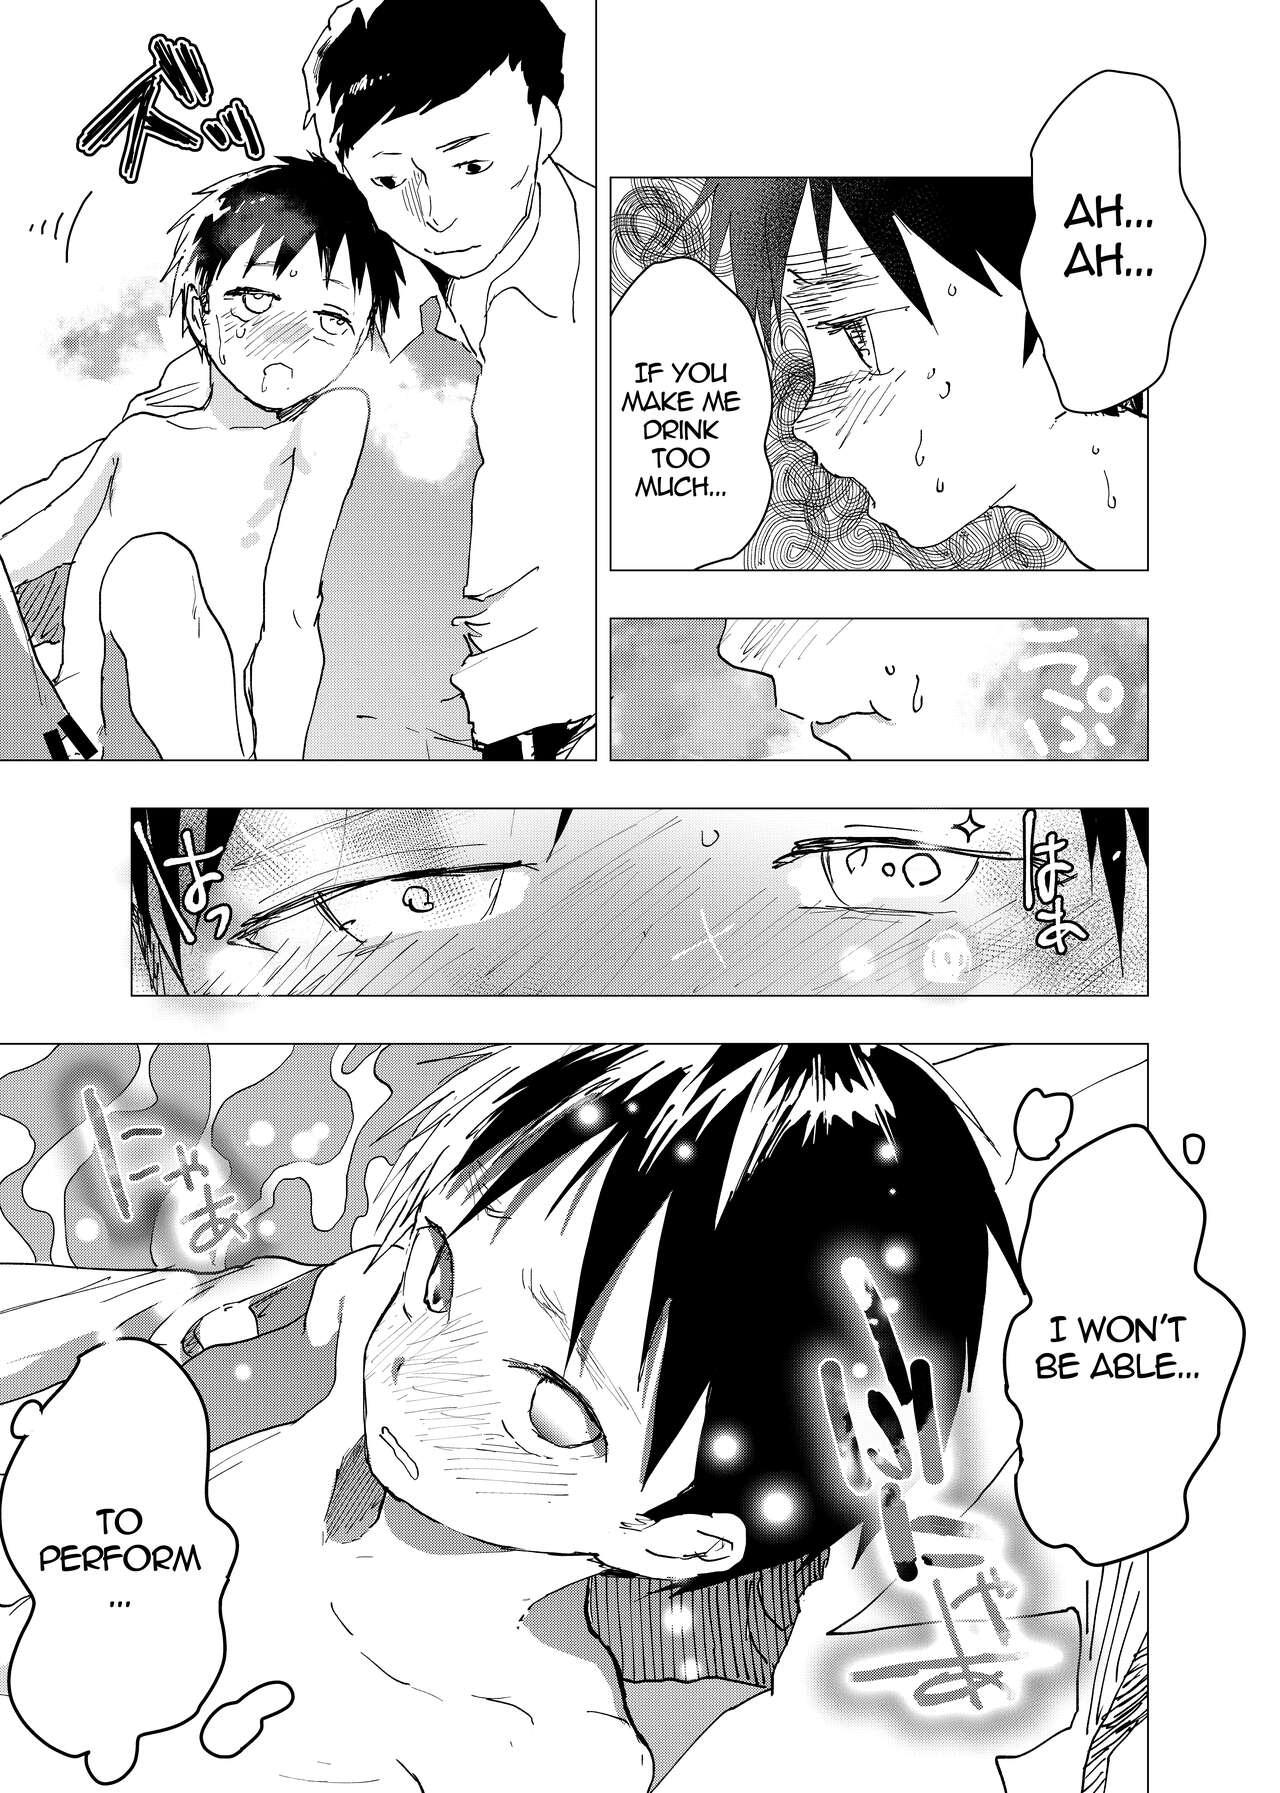 Ibasho ga Nai node Kamimachi shite mita Suterareta Shounen no Ero Manga Ch. 13 | A Dirty Manga About a Boy Who Got Abandoned and Is Waiting for Someone To Save Him Ch. 13 19